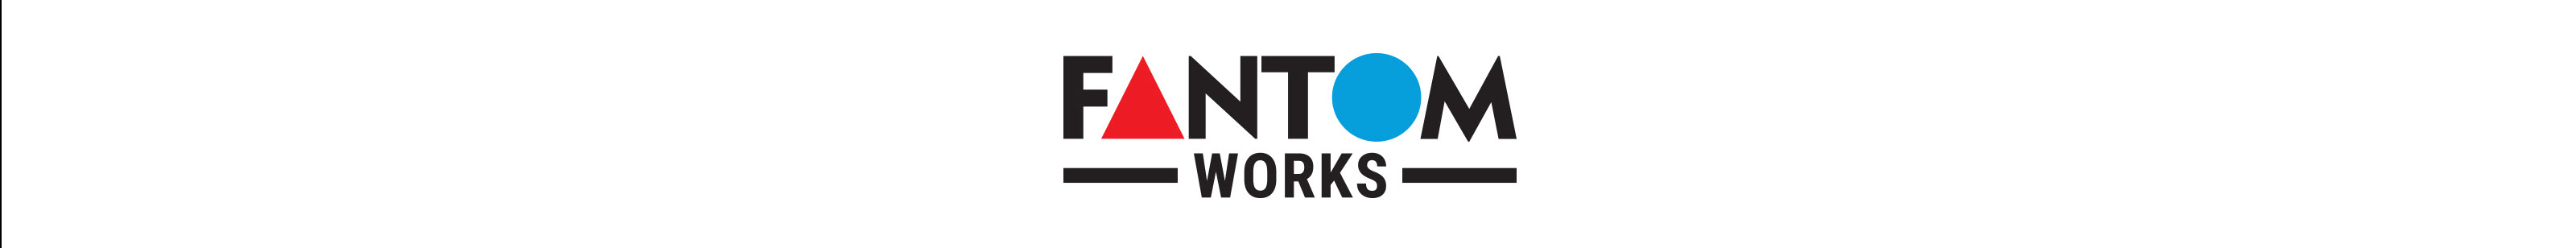 Banner de perfil de Fantom Works